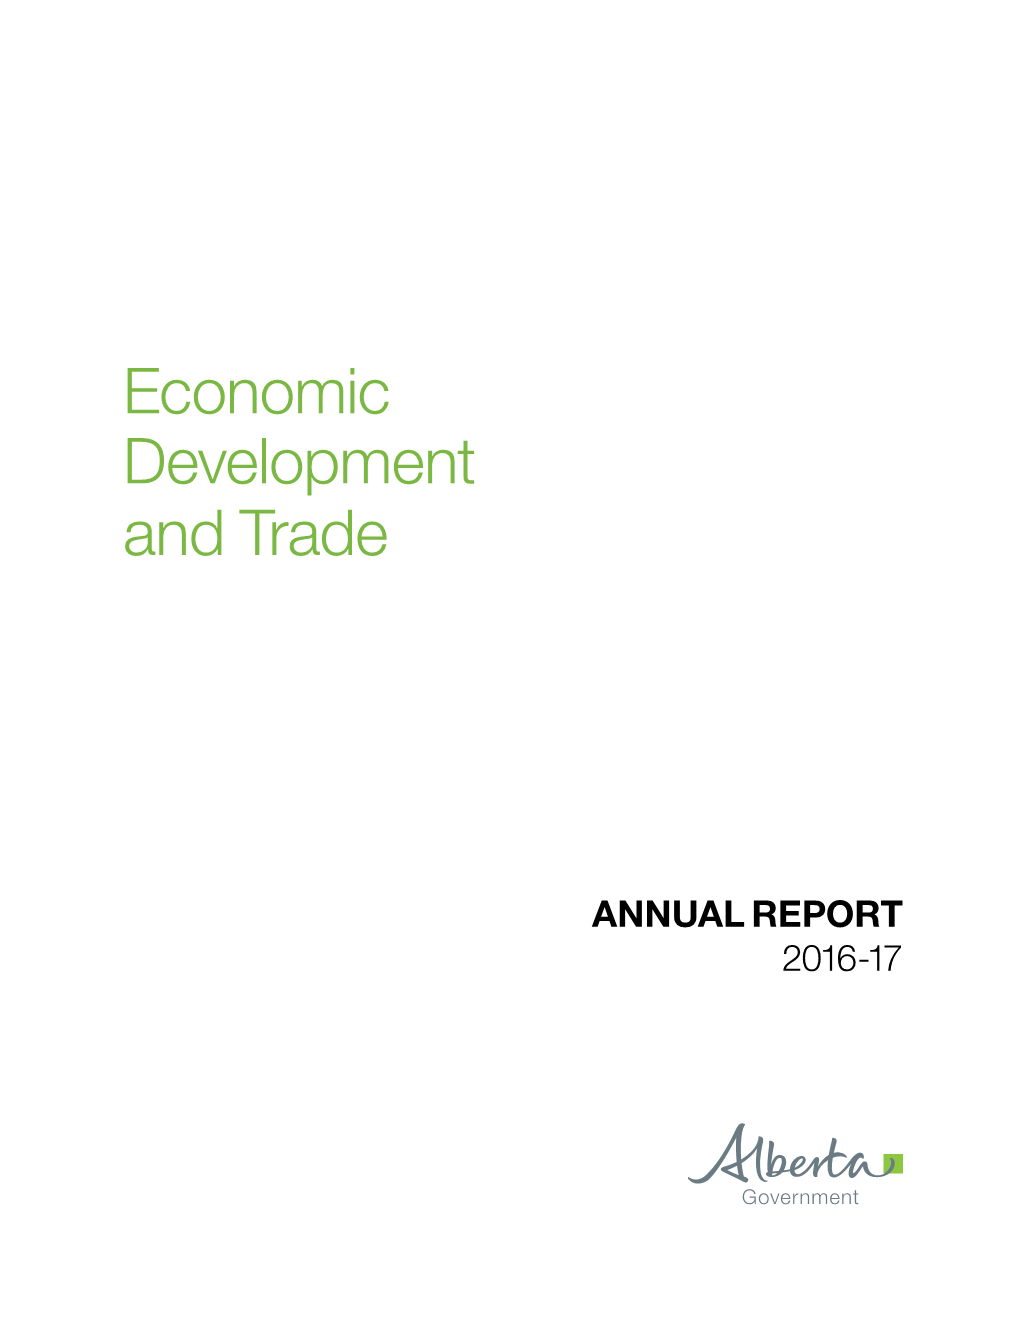 Economic Developement and Trade Annual Report 2016-17